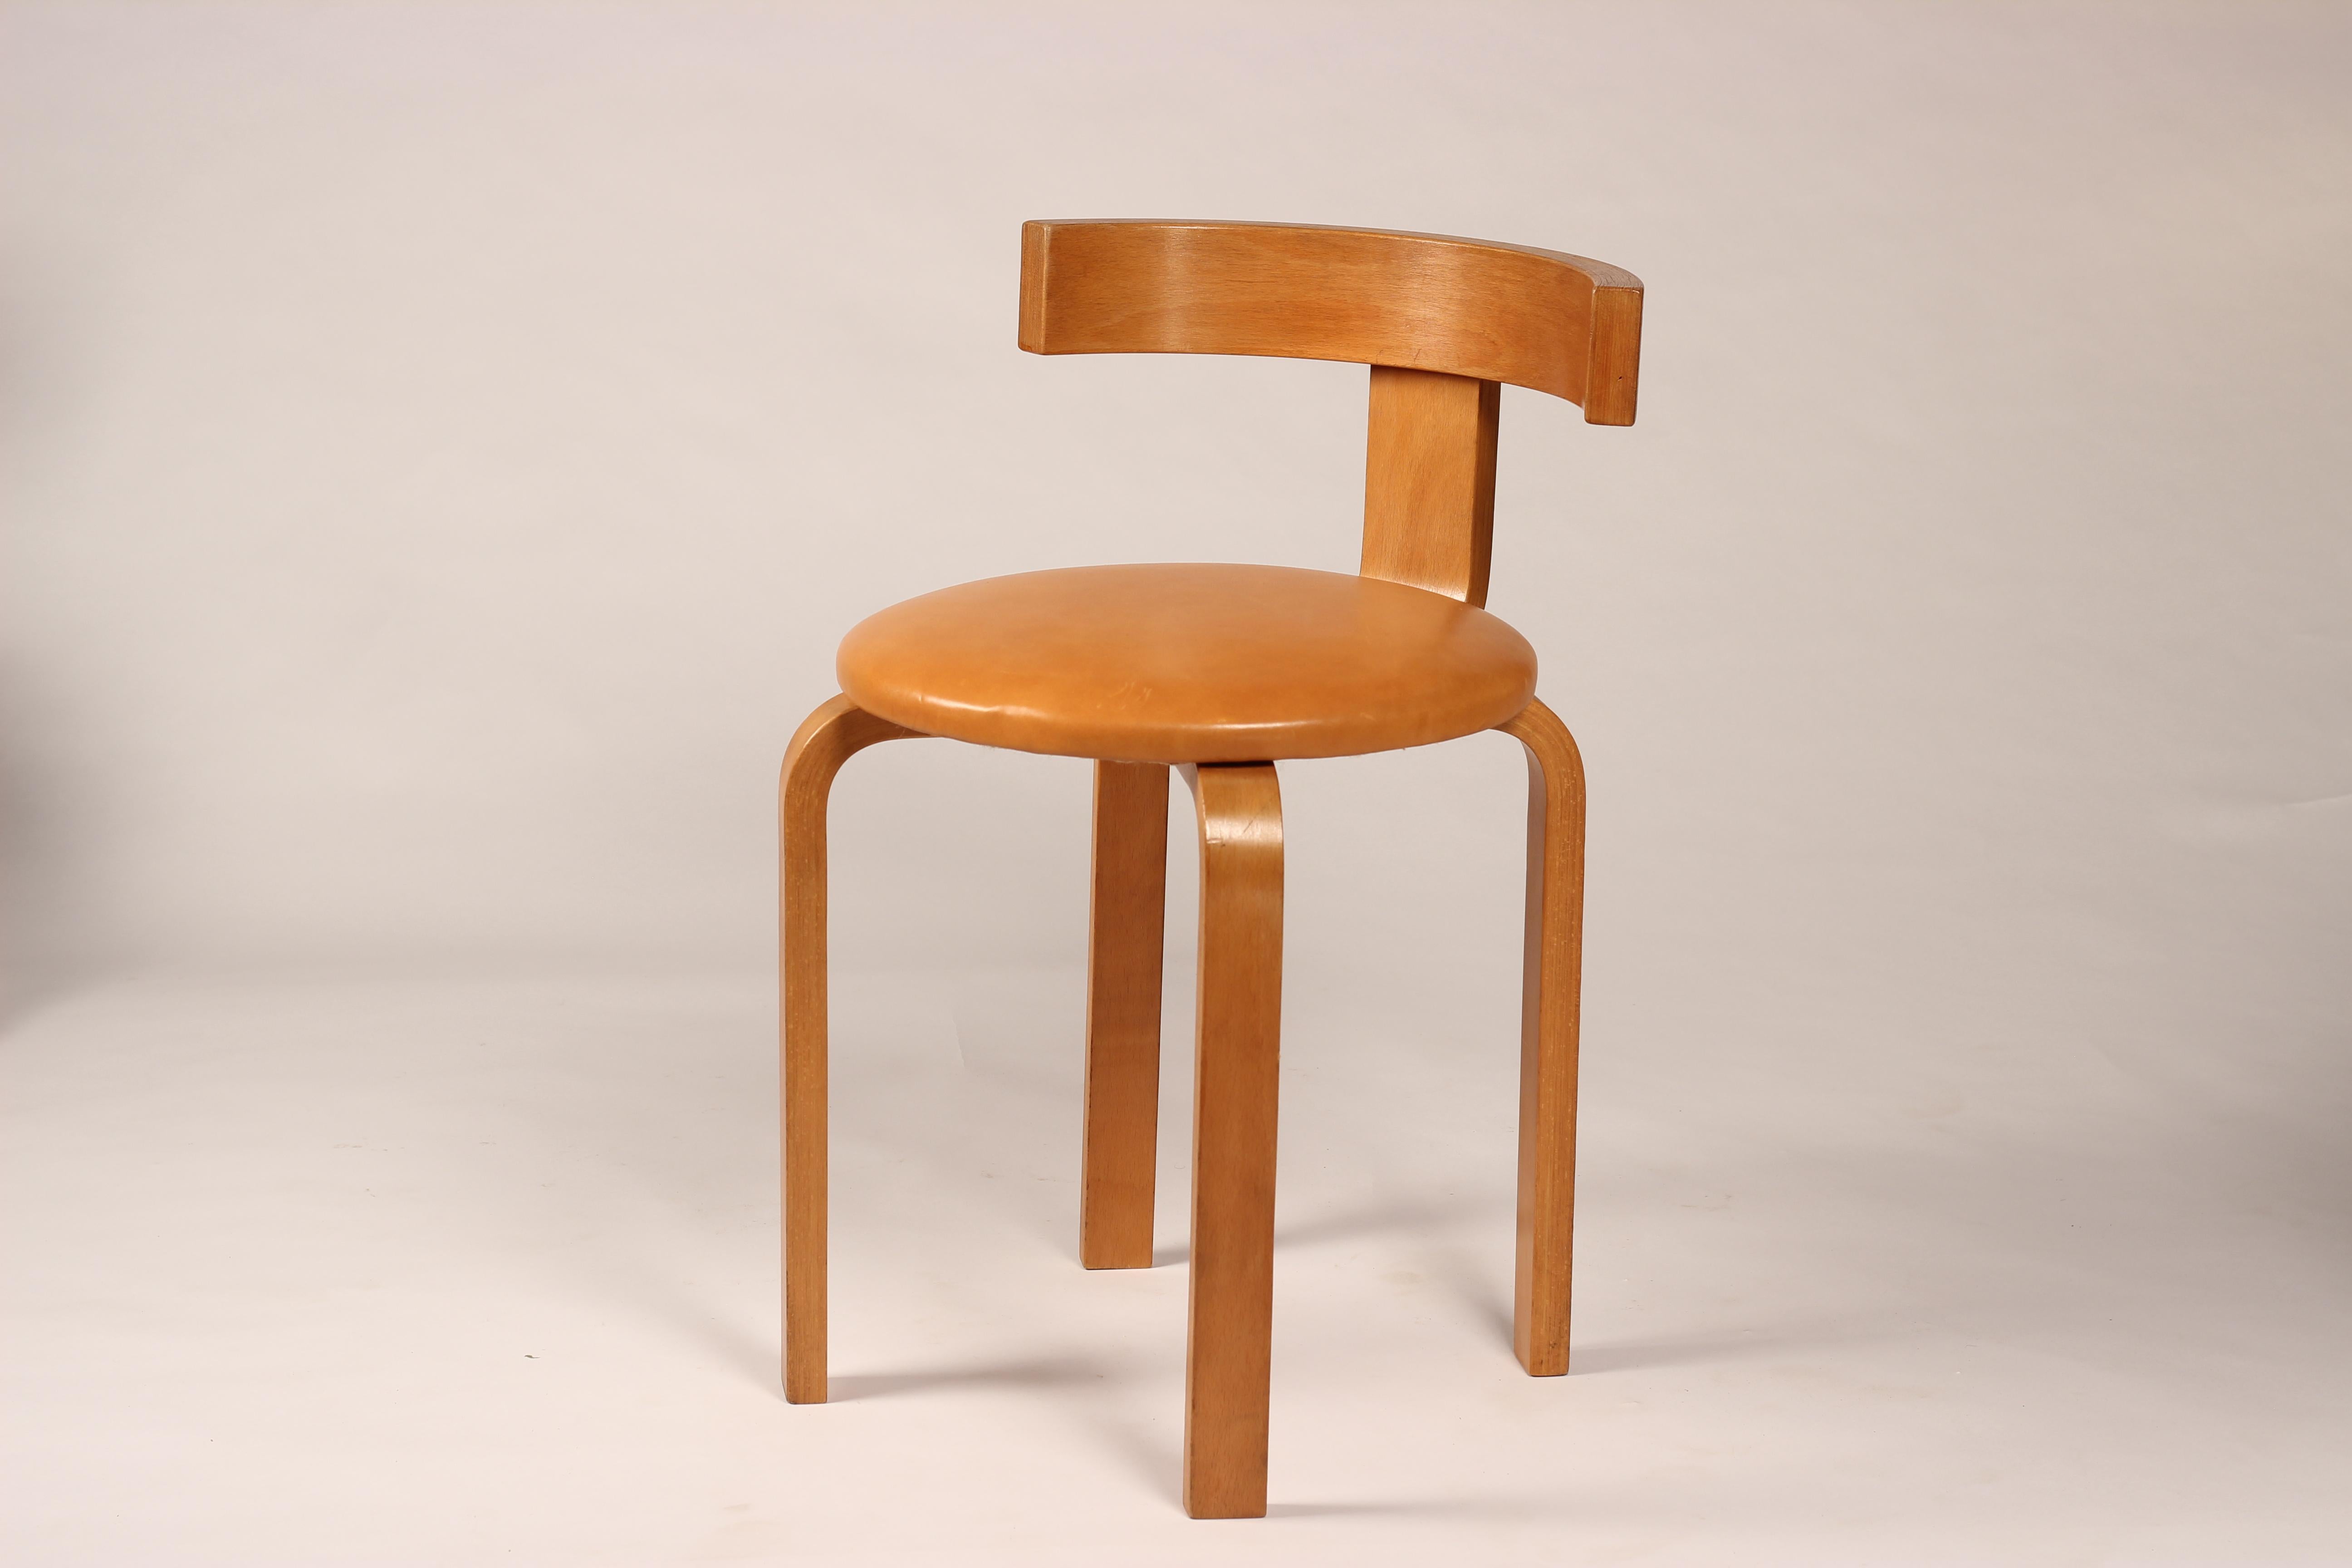 Danish Chairs by Georg Petersens for Mobelfabrik in Style of Alvar Aalto 1